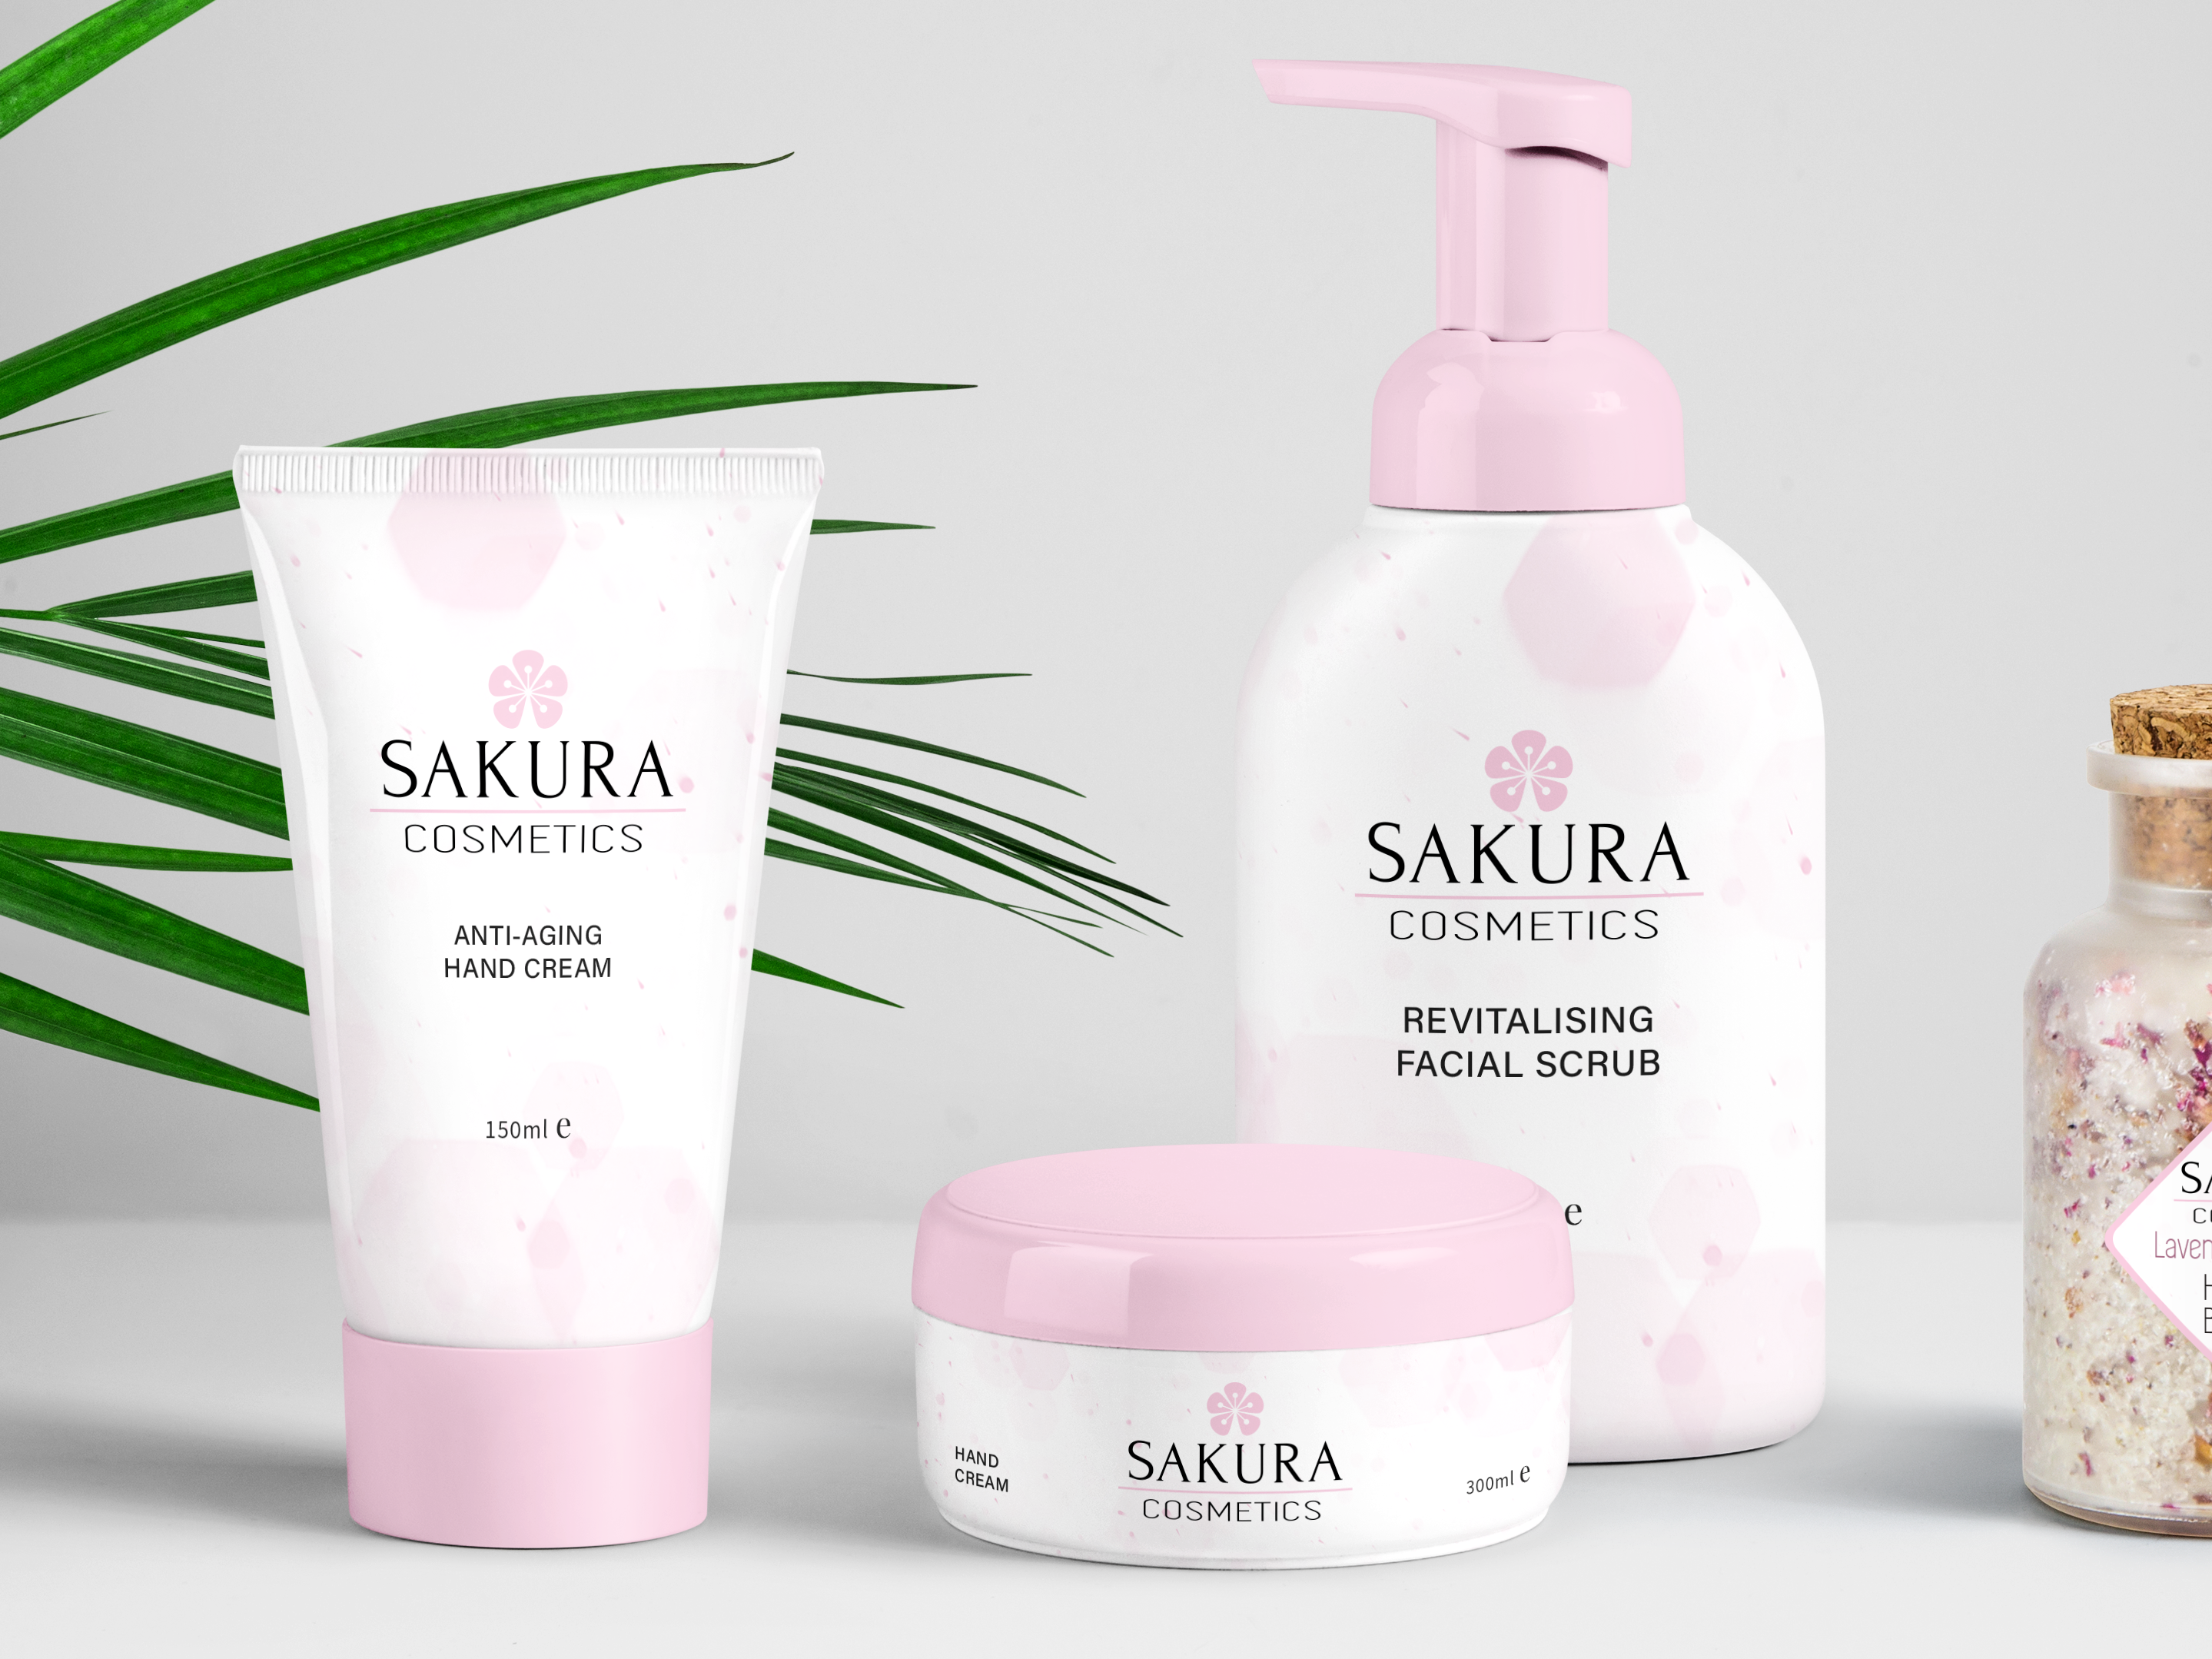 Sakura Cosmetics Branding & Product Design by Mike Crosby on Dribbble